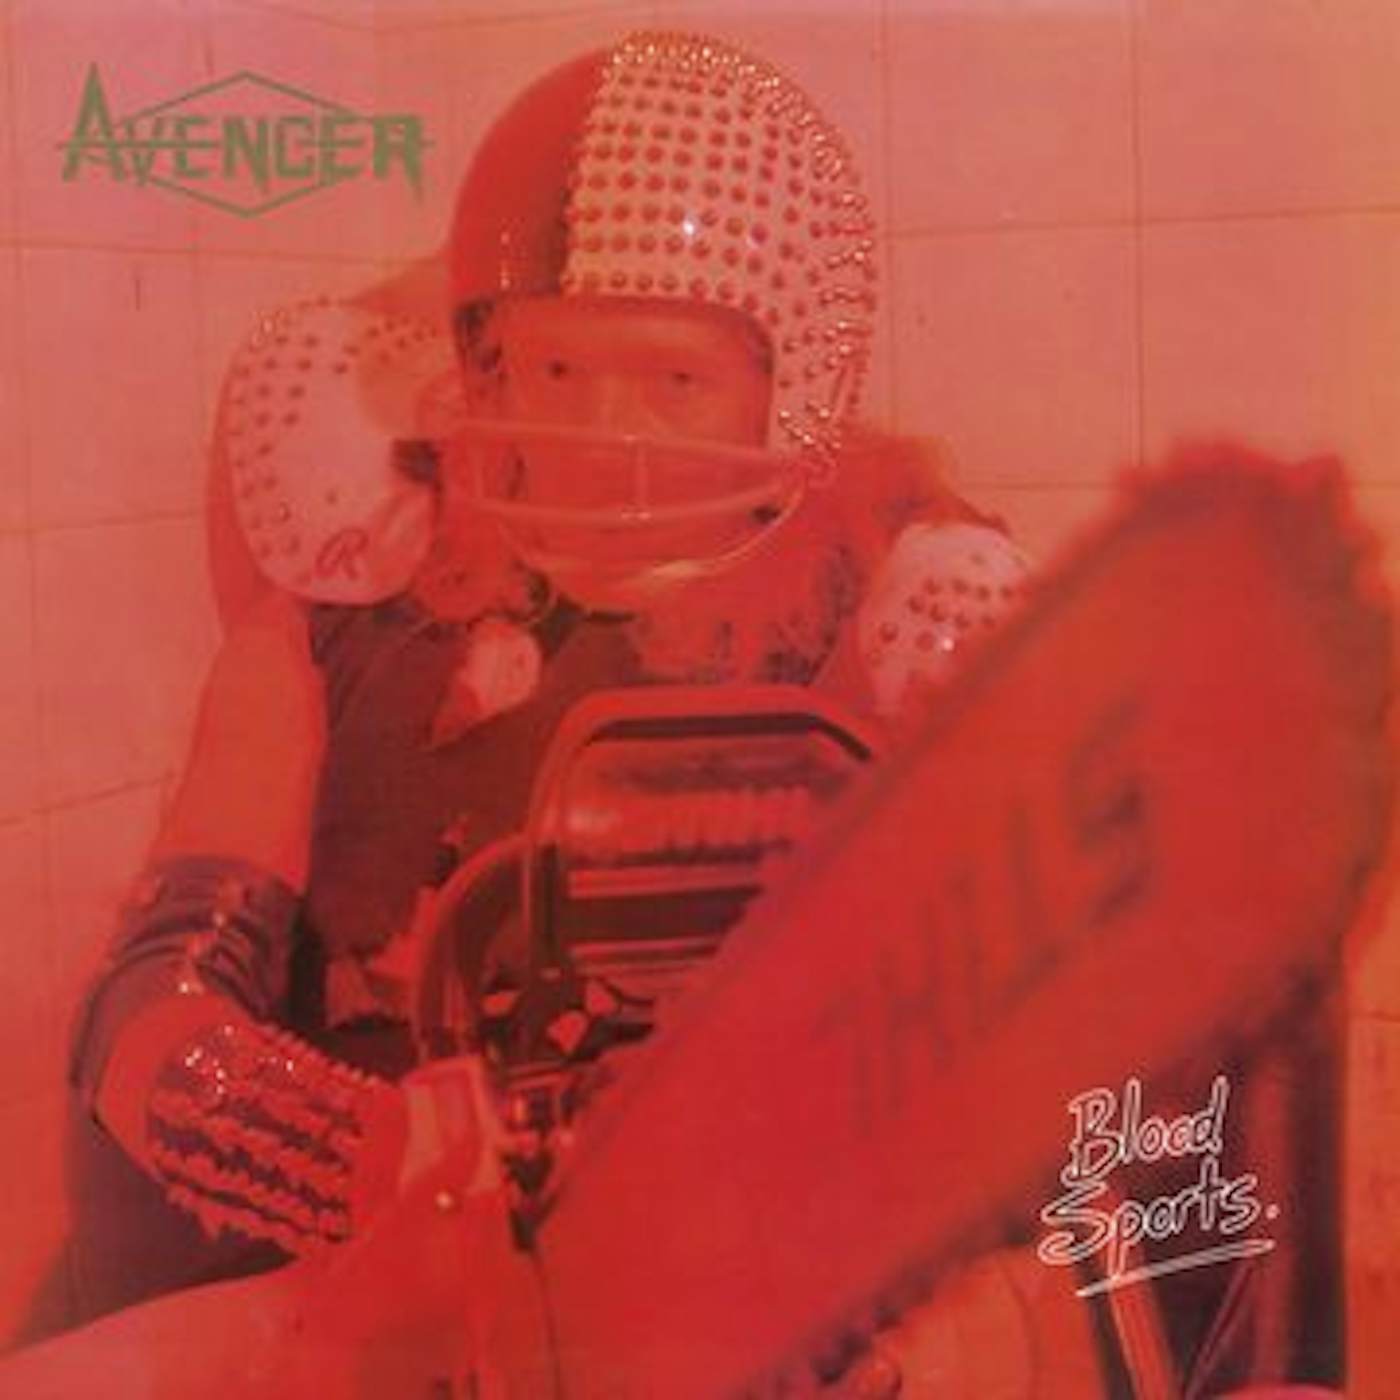 Avenger Blood Sports Vinyl Record